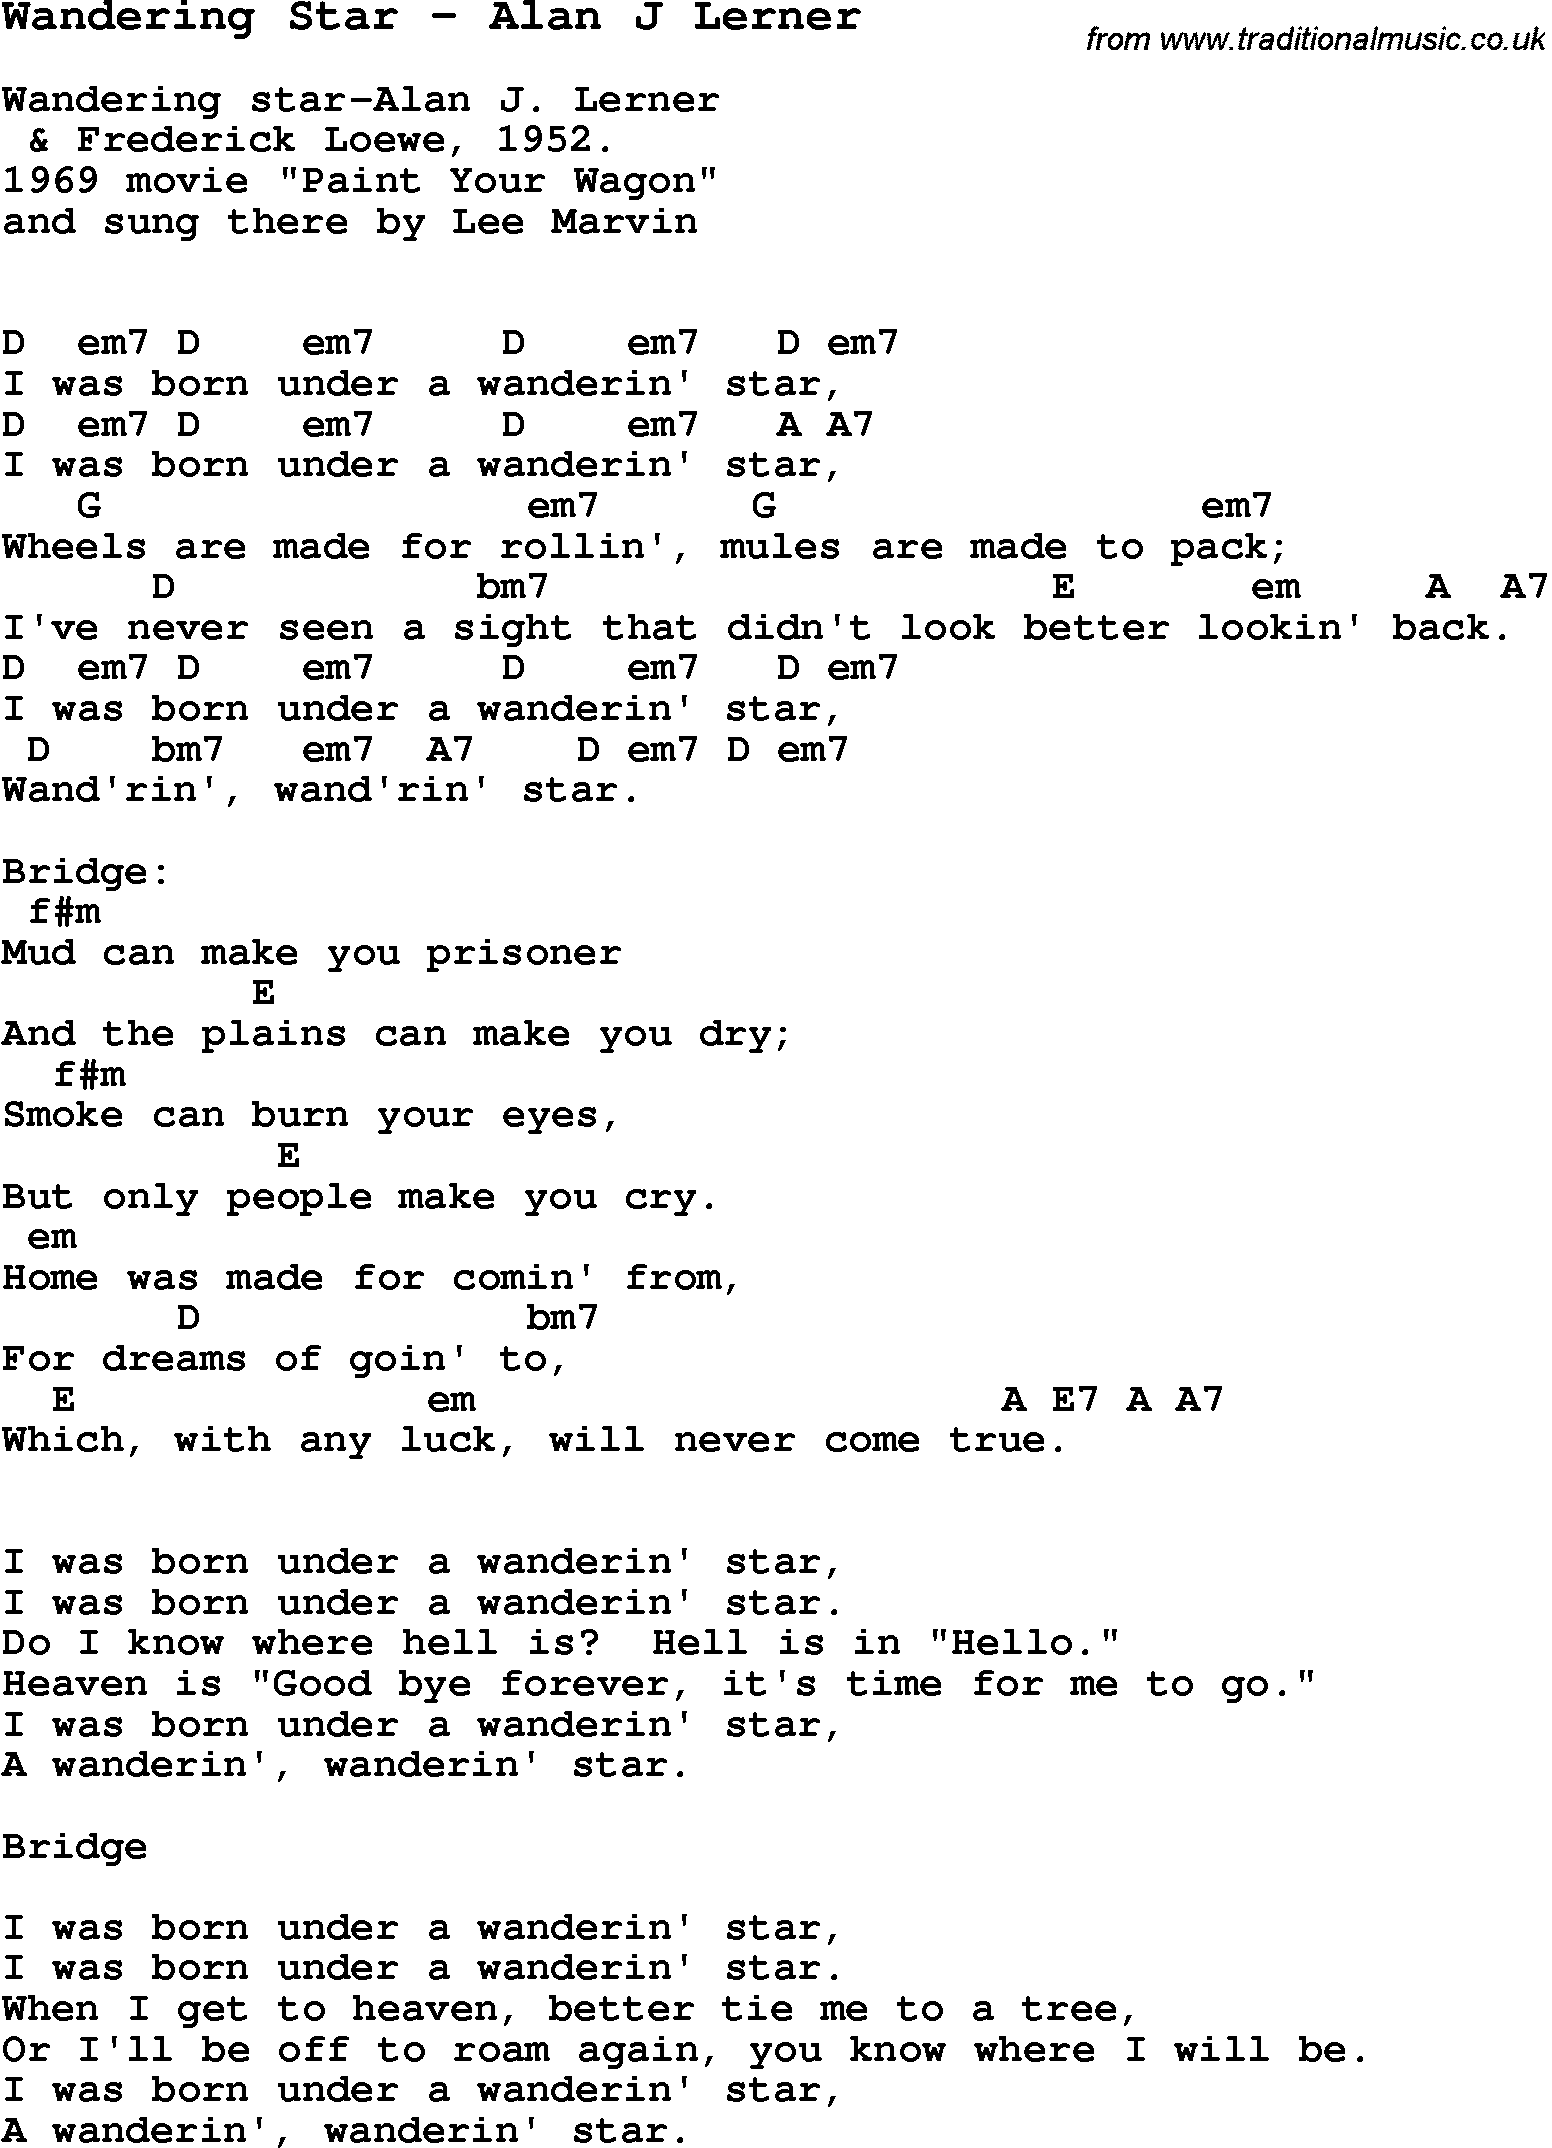 lyrics for wandering star